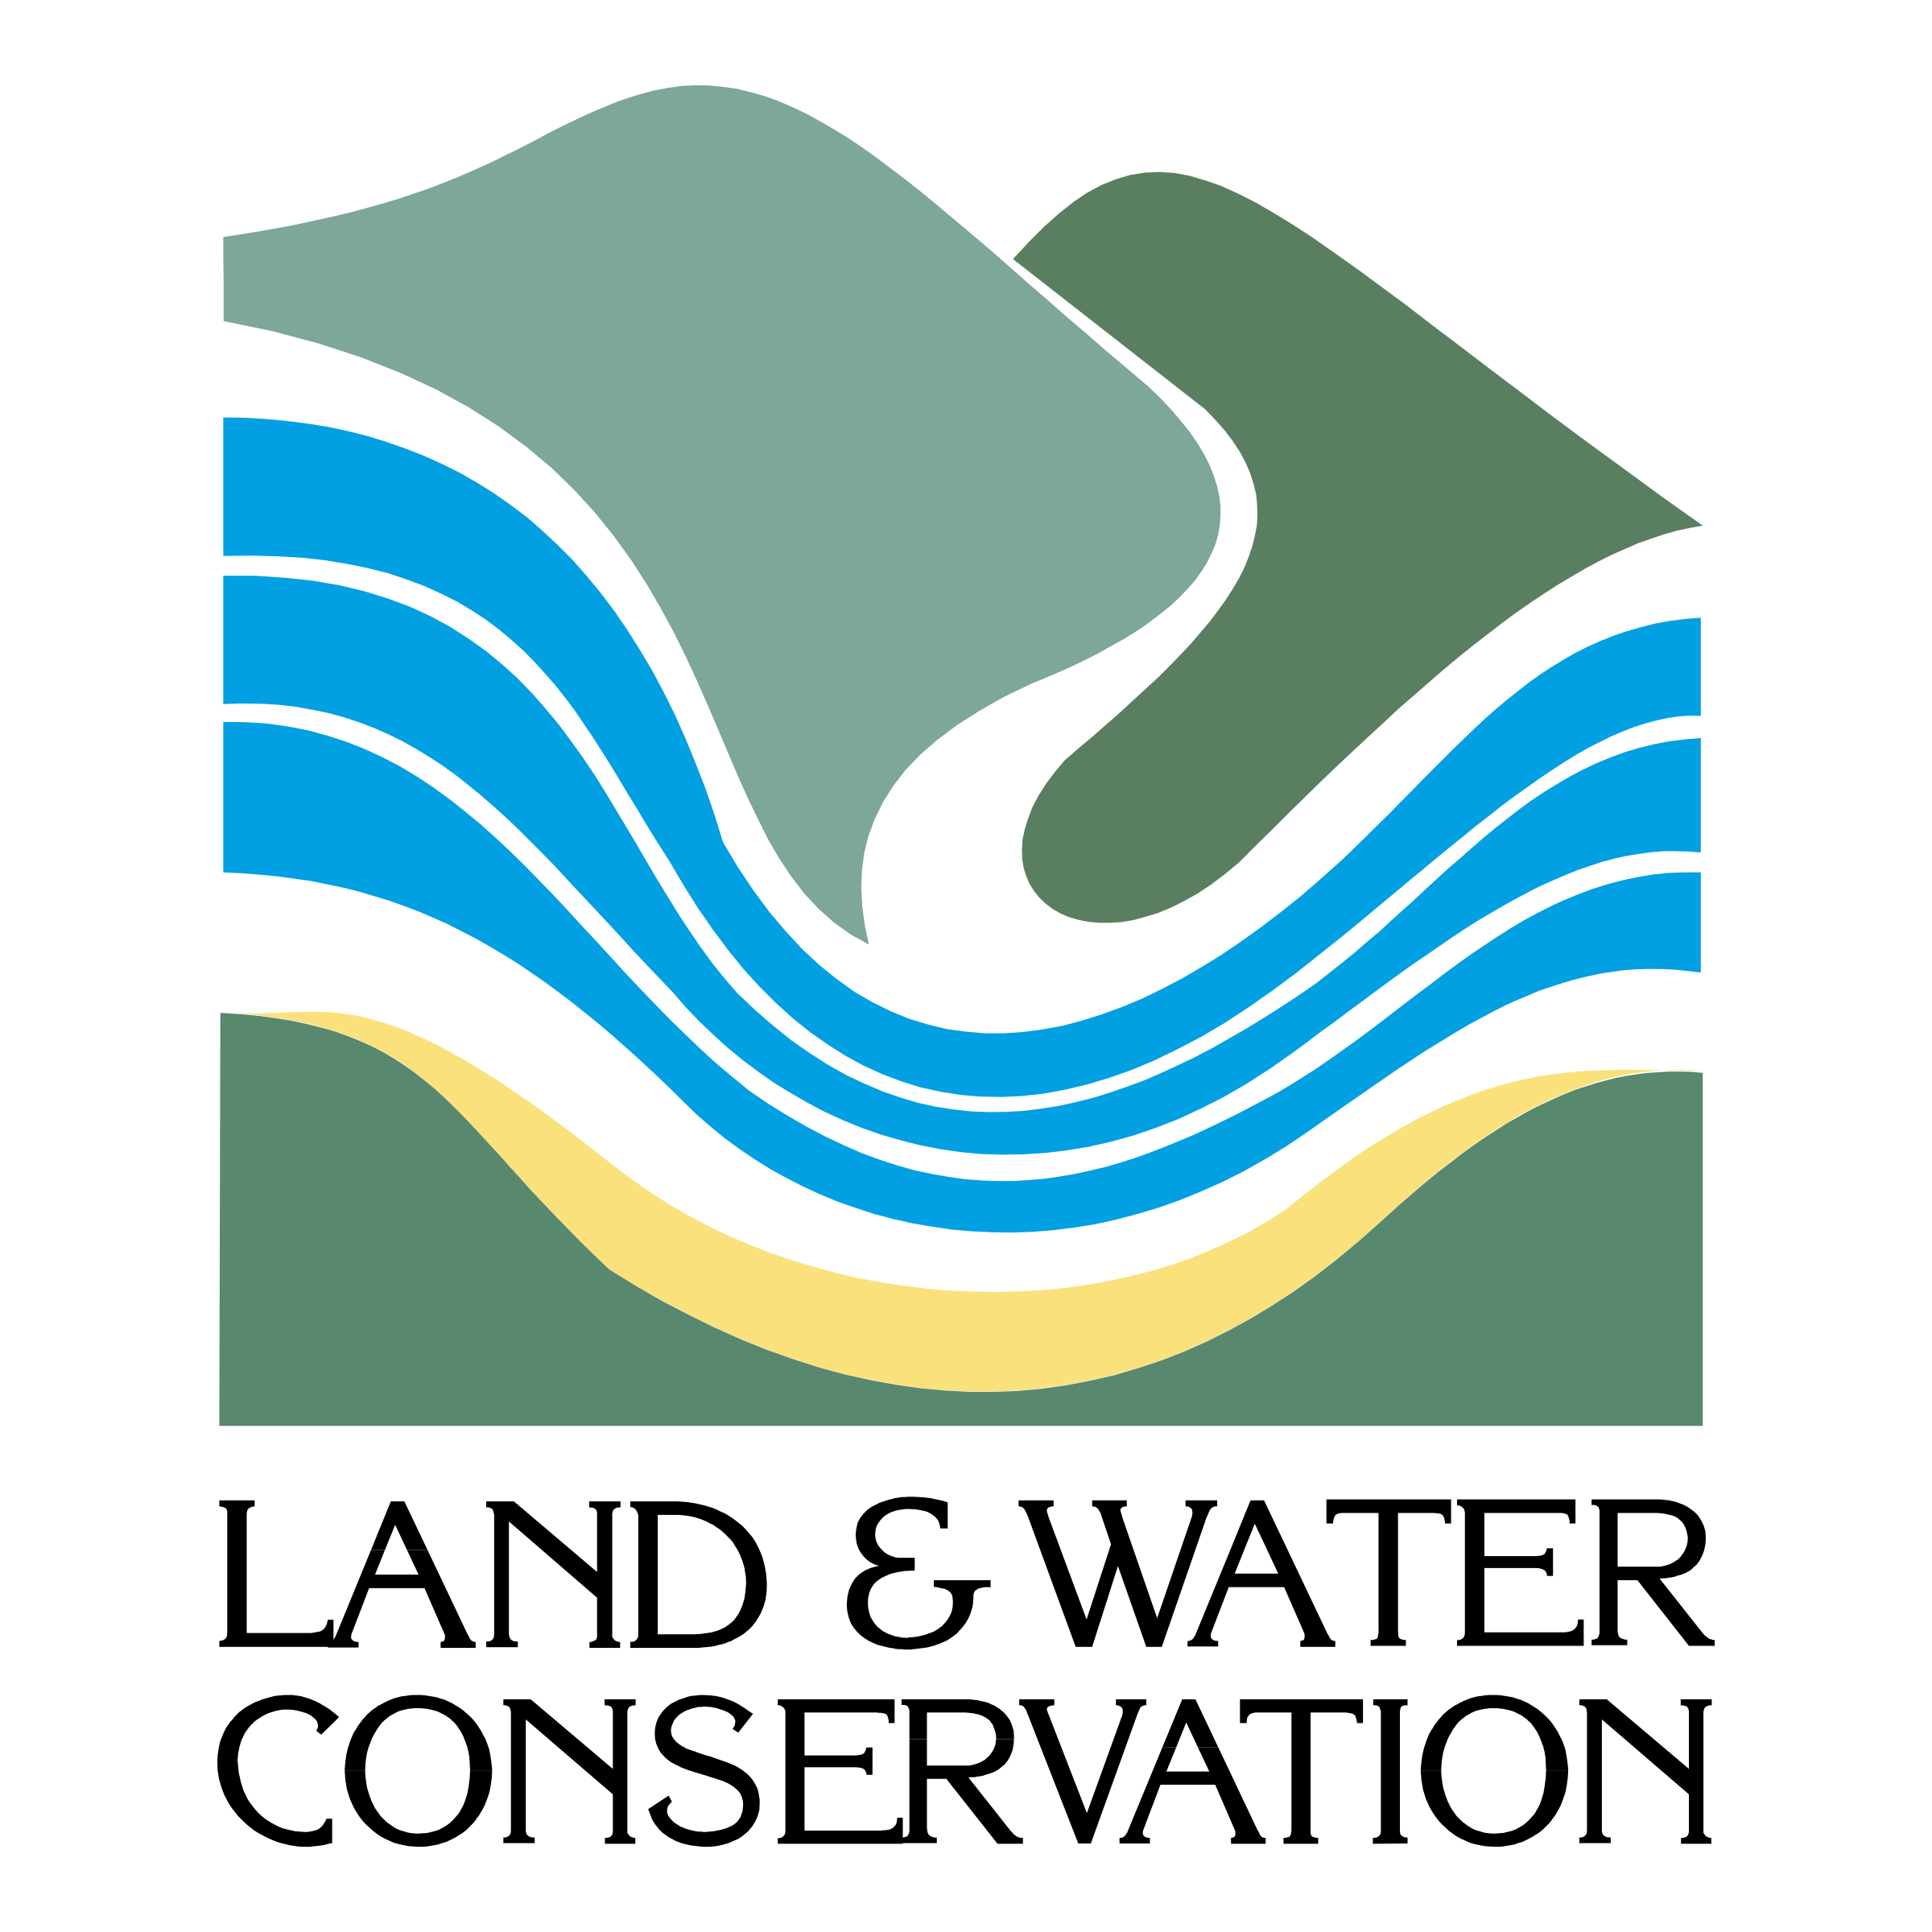 Conservation Logo - Land and Water Conservation Logo PNG Transparent & SVG Vector